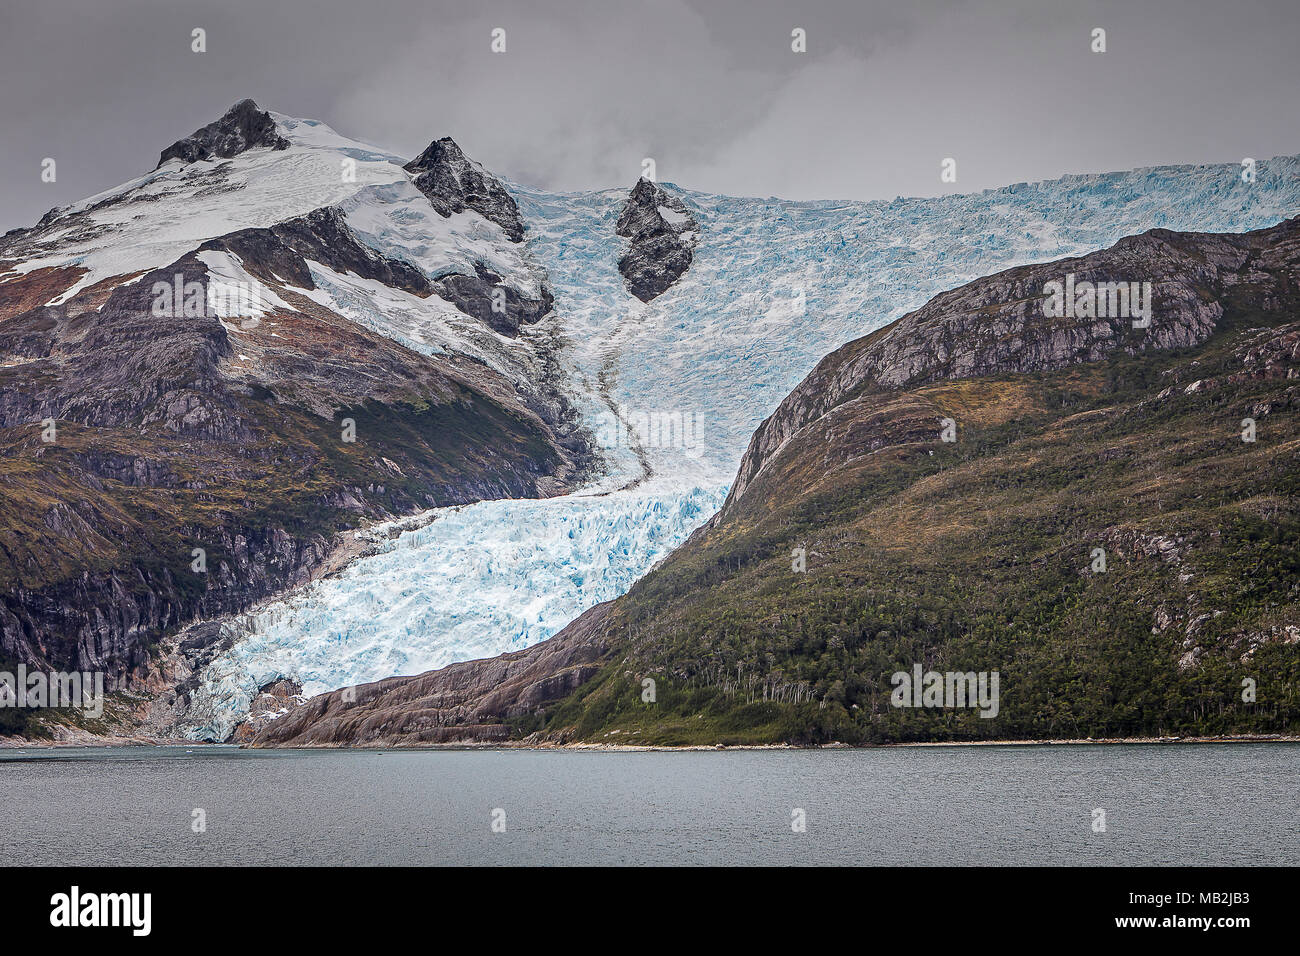 Italia, l'Avenue des glaciers les glaciers, PN Alberto de Agostini, la Terre de Feu, Patagonie, Chili Banque D'Images